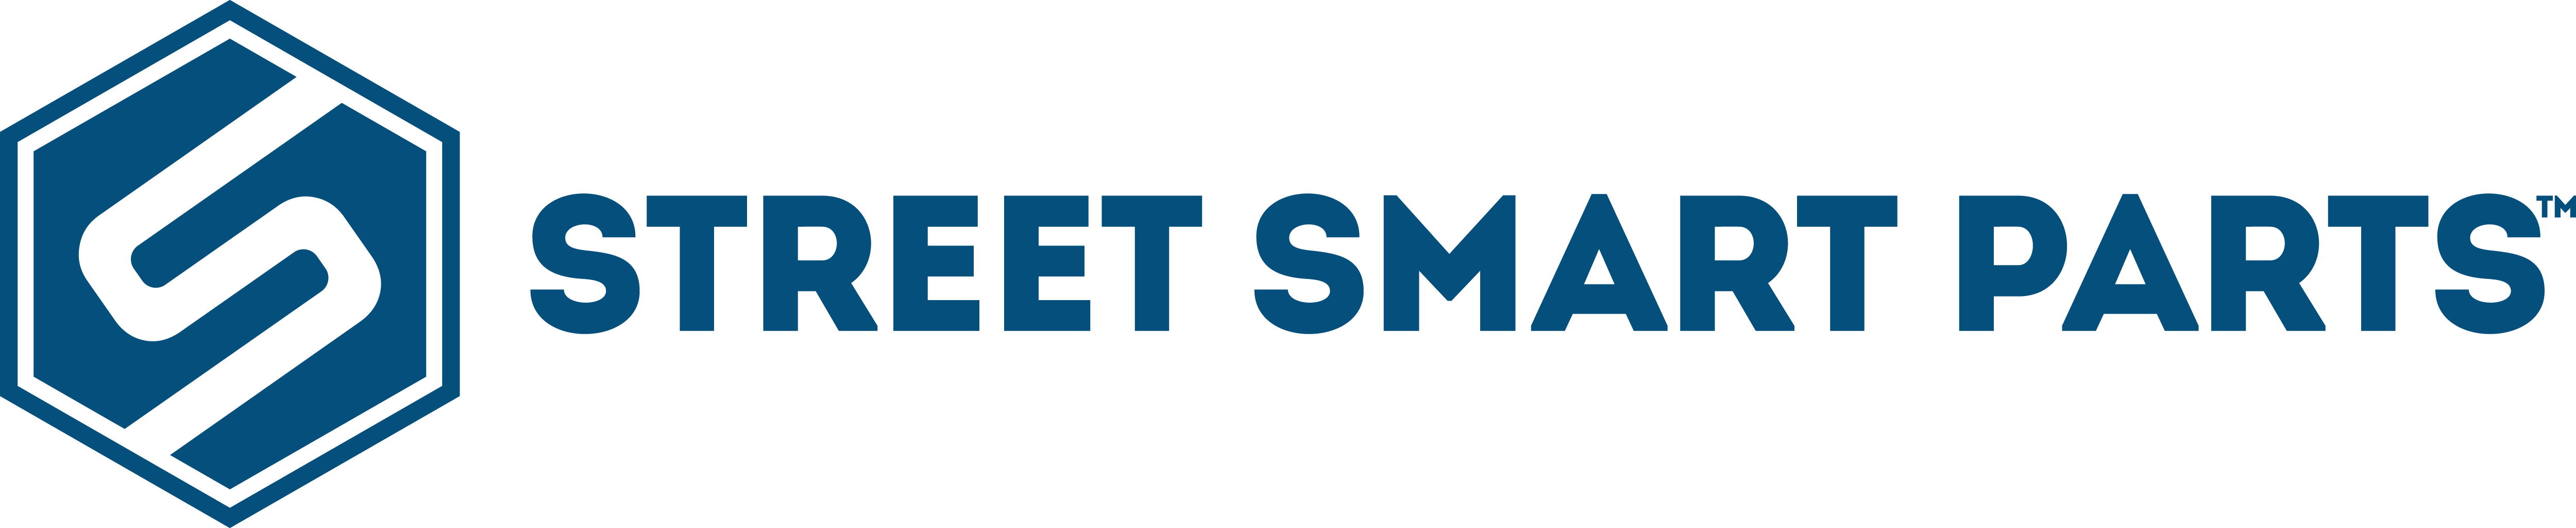 Smart parts logo